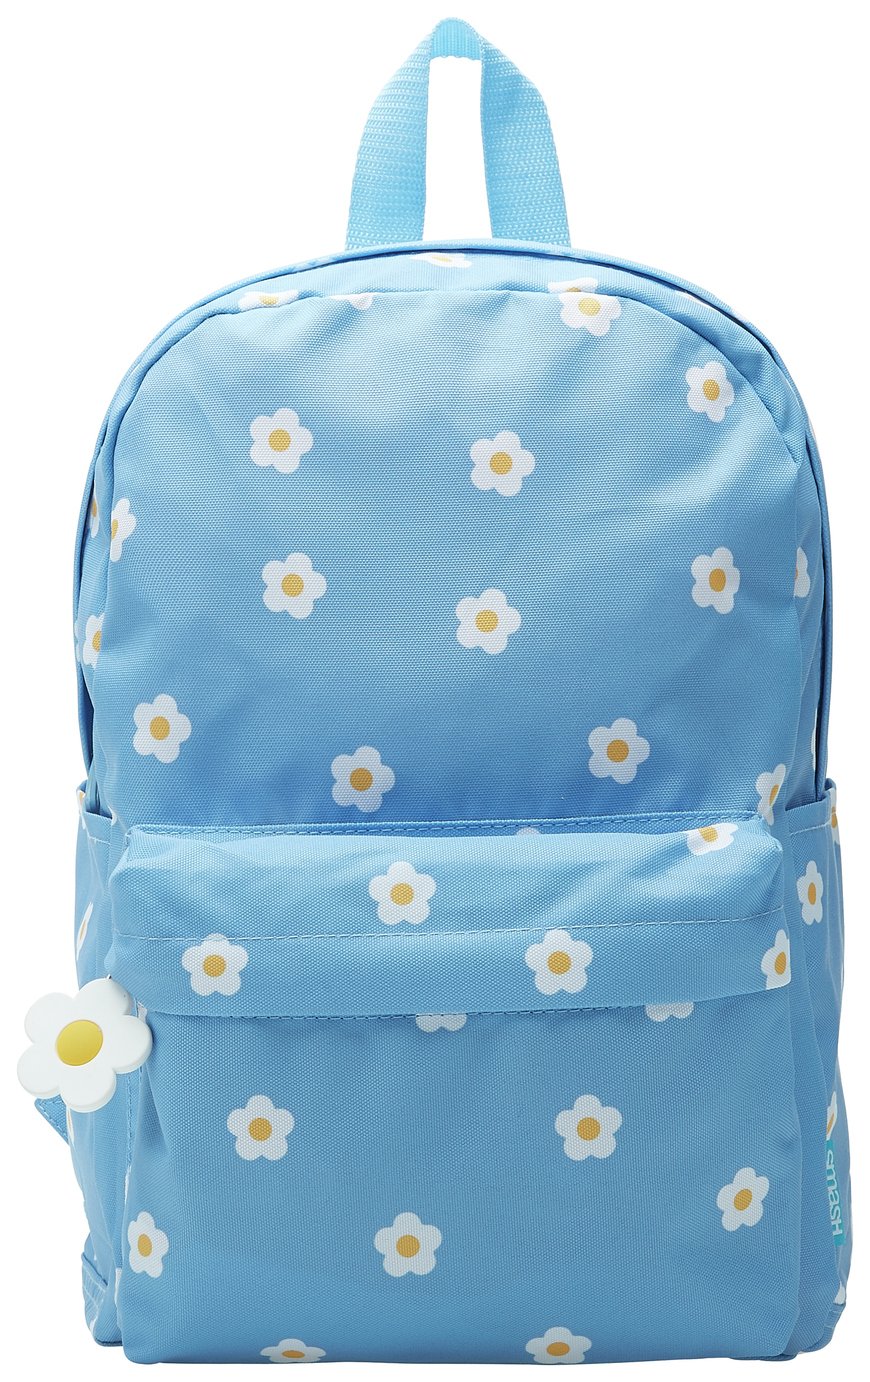 Smash Daisy Backpack